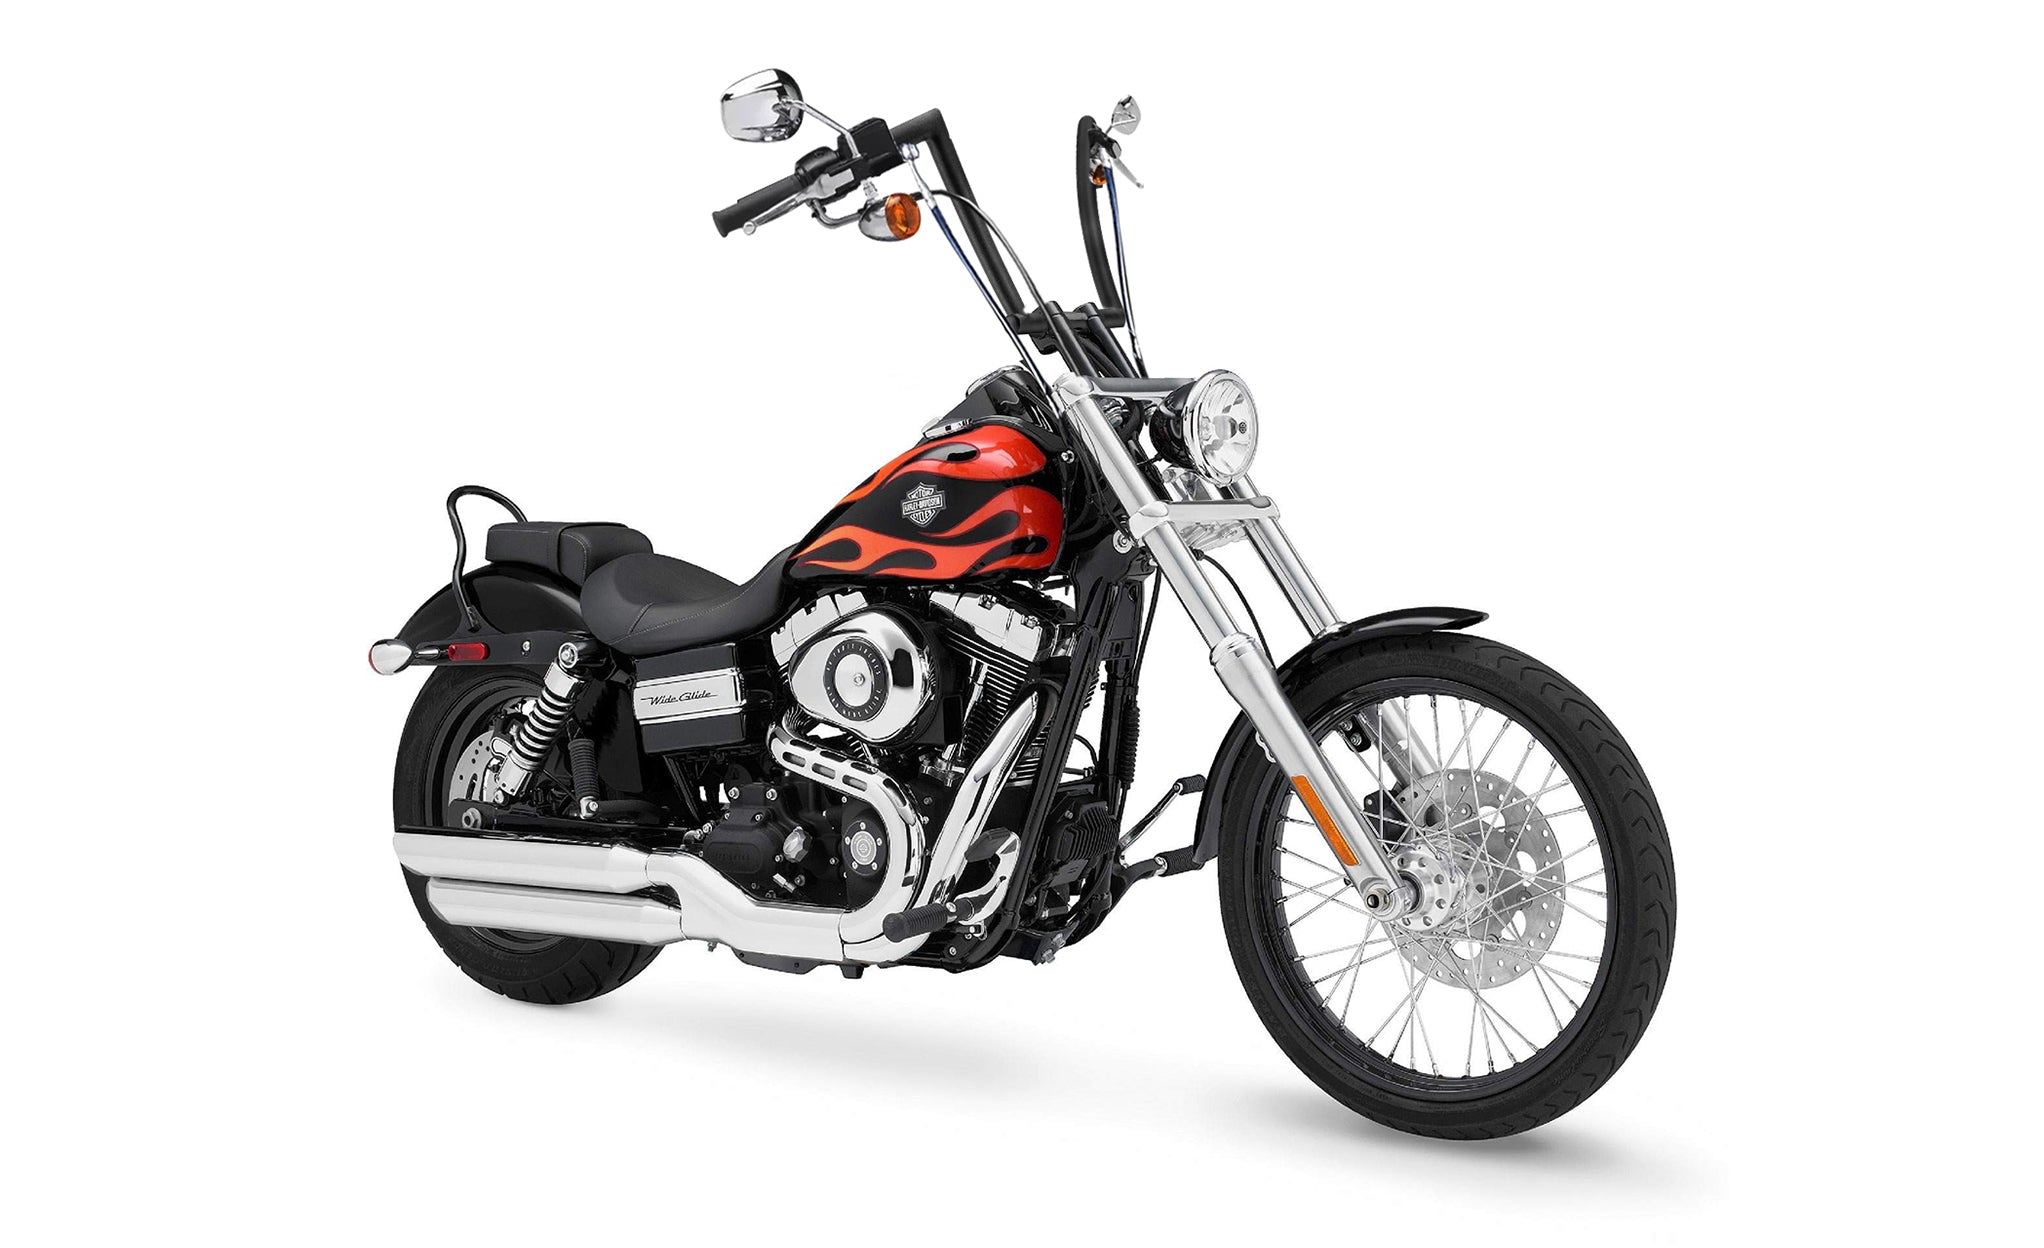 Viking Iron Born 9" Handlebar for Harley Dyna Wide Glide FXDWG Matte Black Bag on Bike View @expand